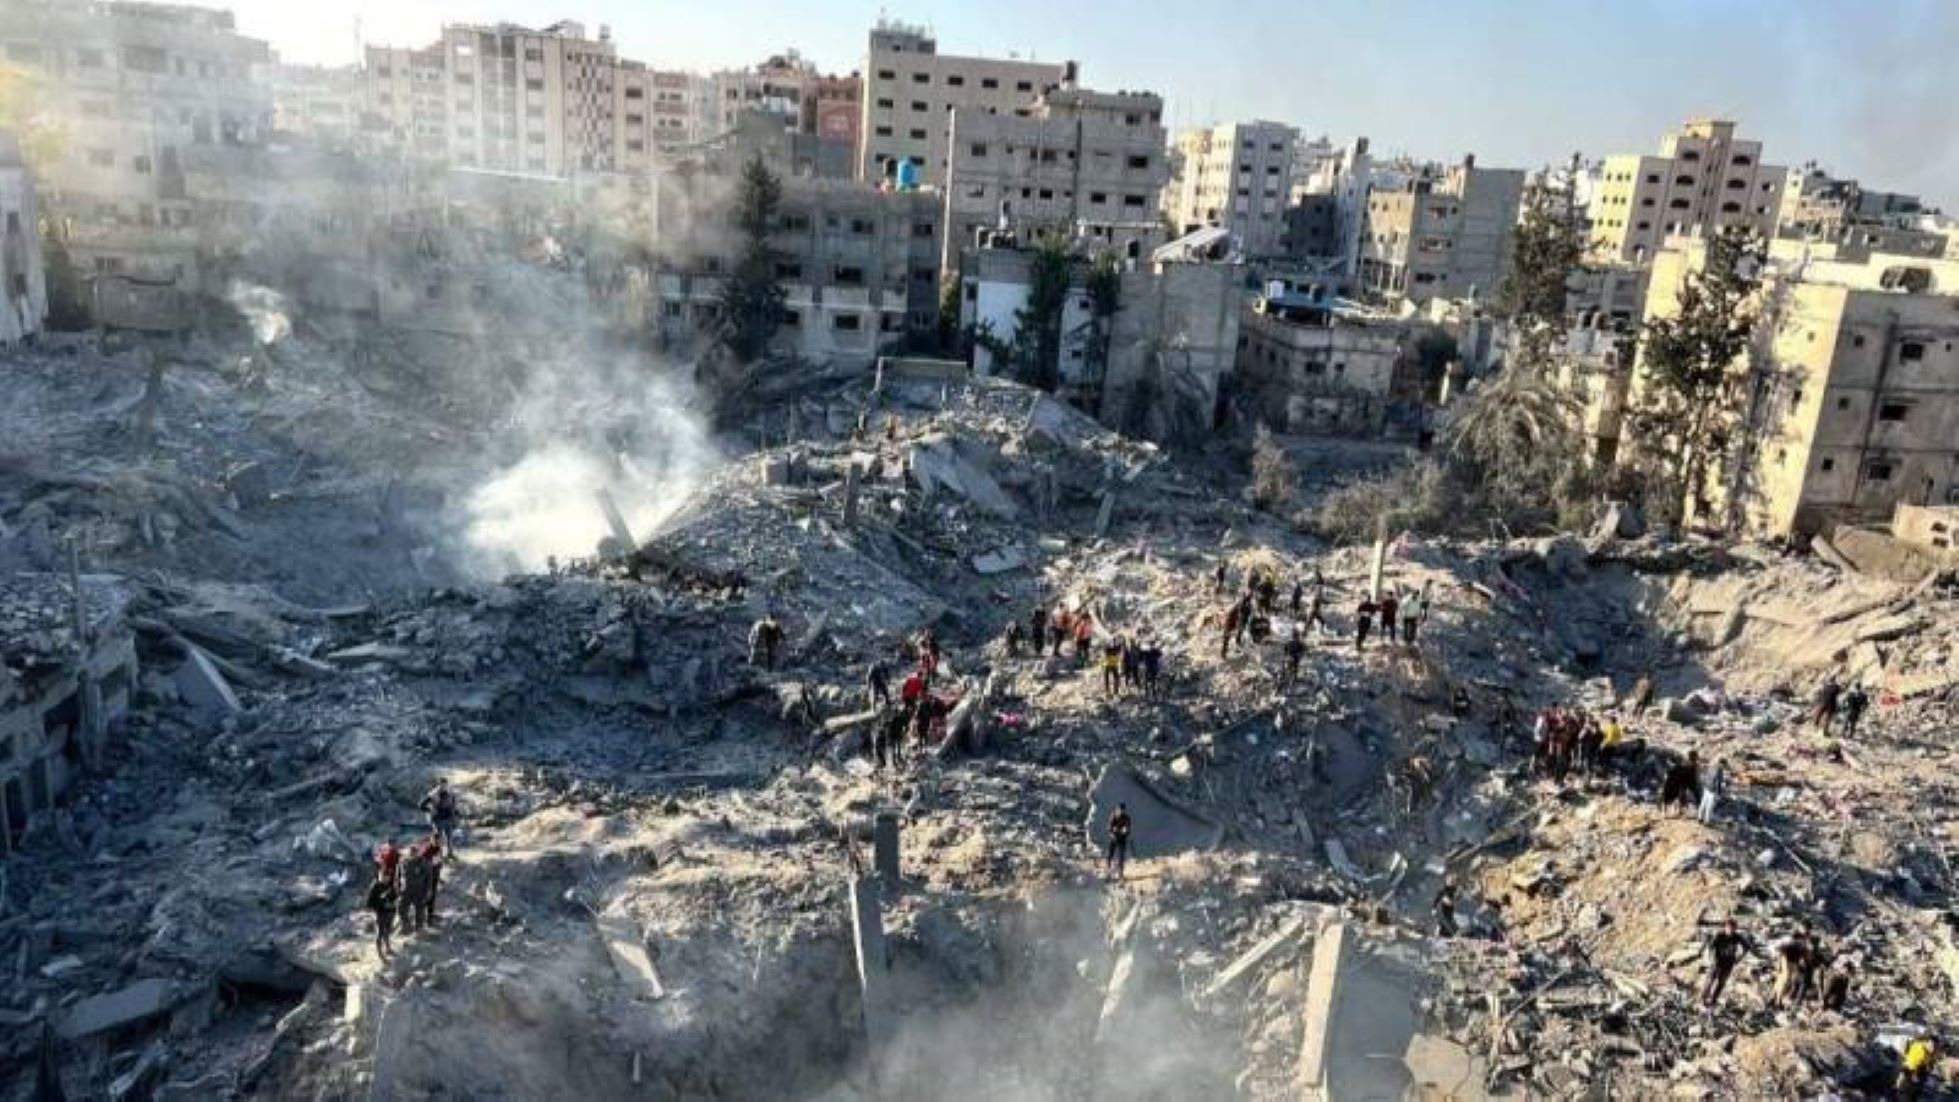 Indonesian and Pakistan NGOs present plans to rebuild Gaza